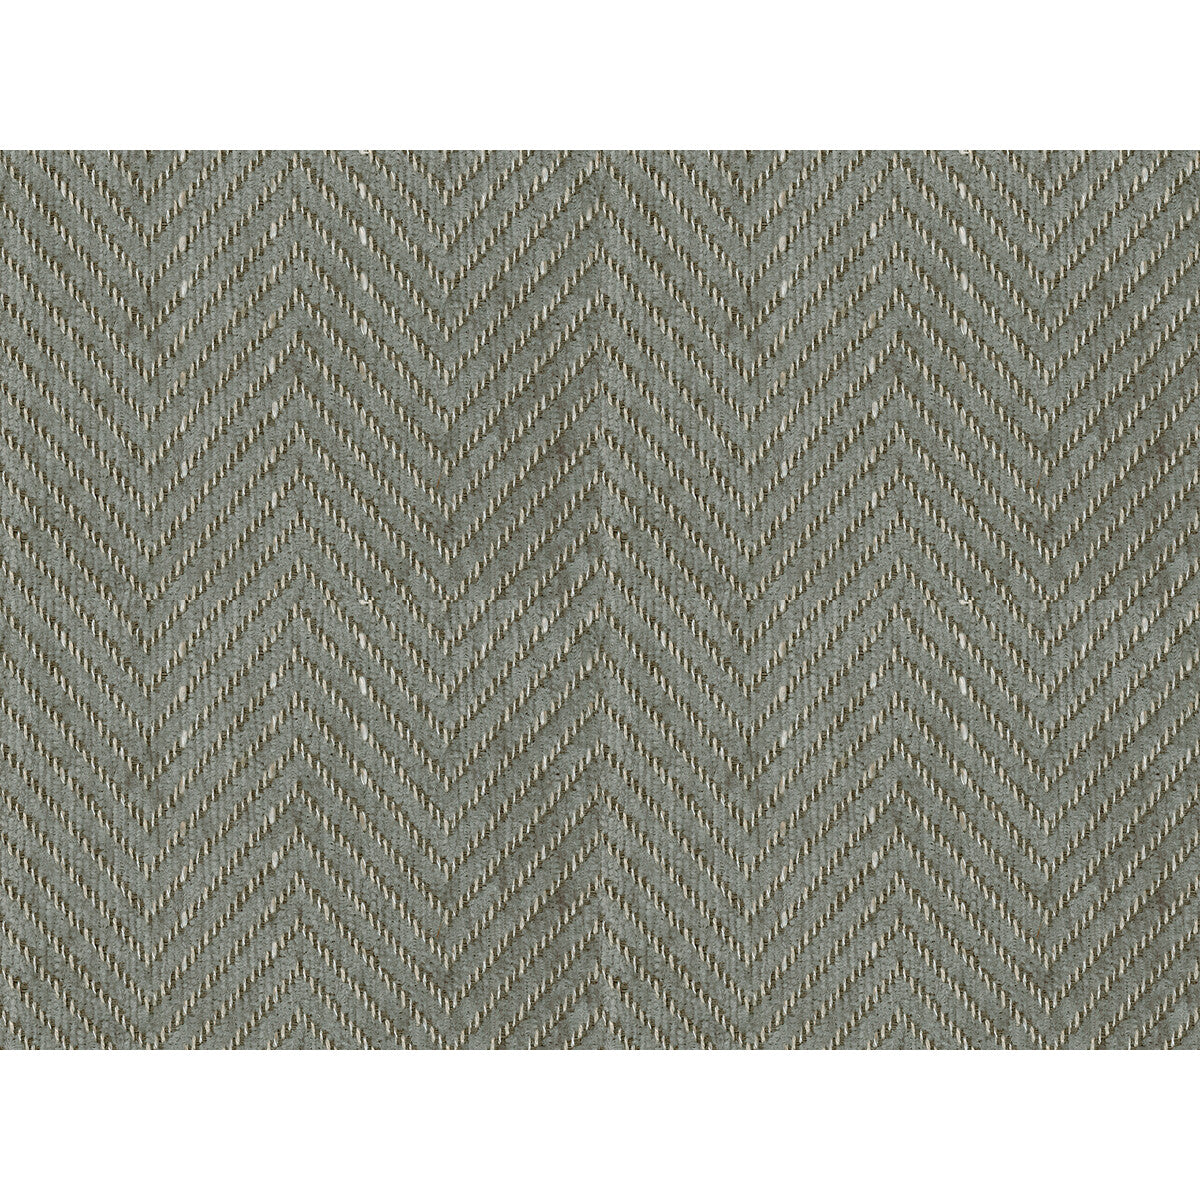 Kravet Smart fabric in 34297-1615 color - pattern 34297.1615.0 - by Kravet Smart